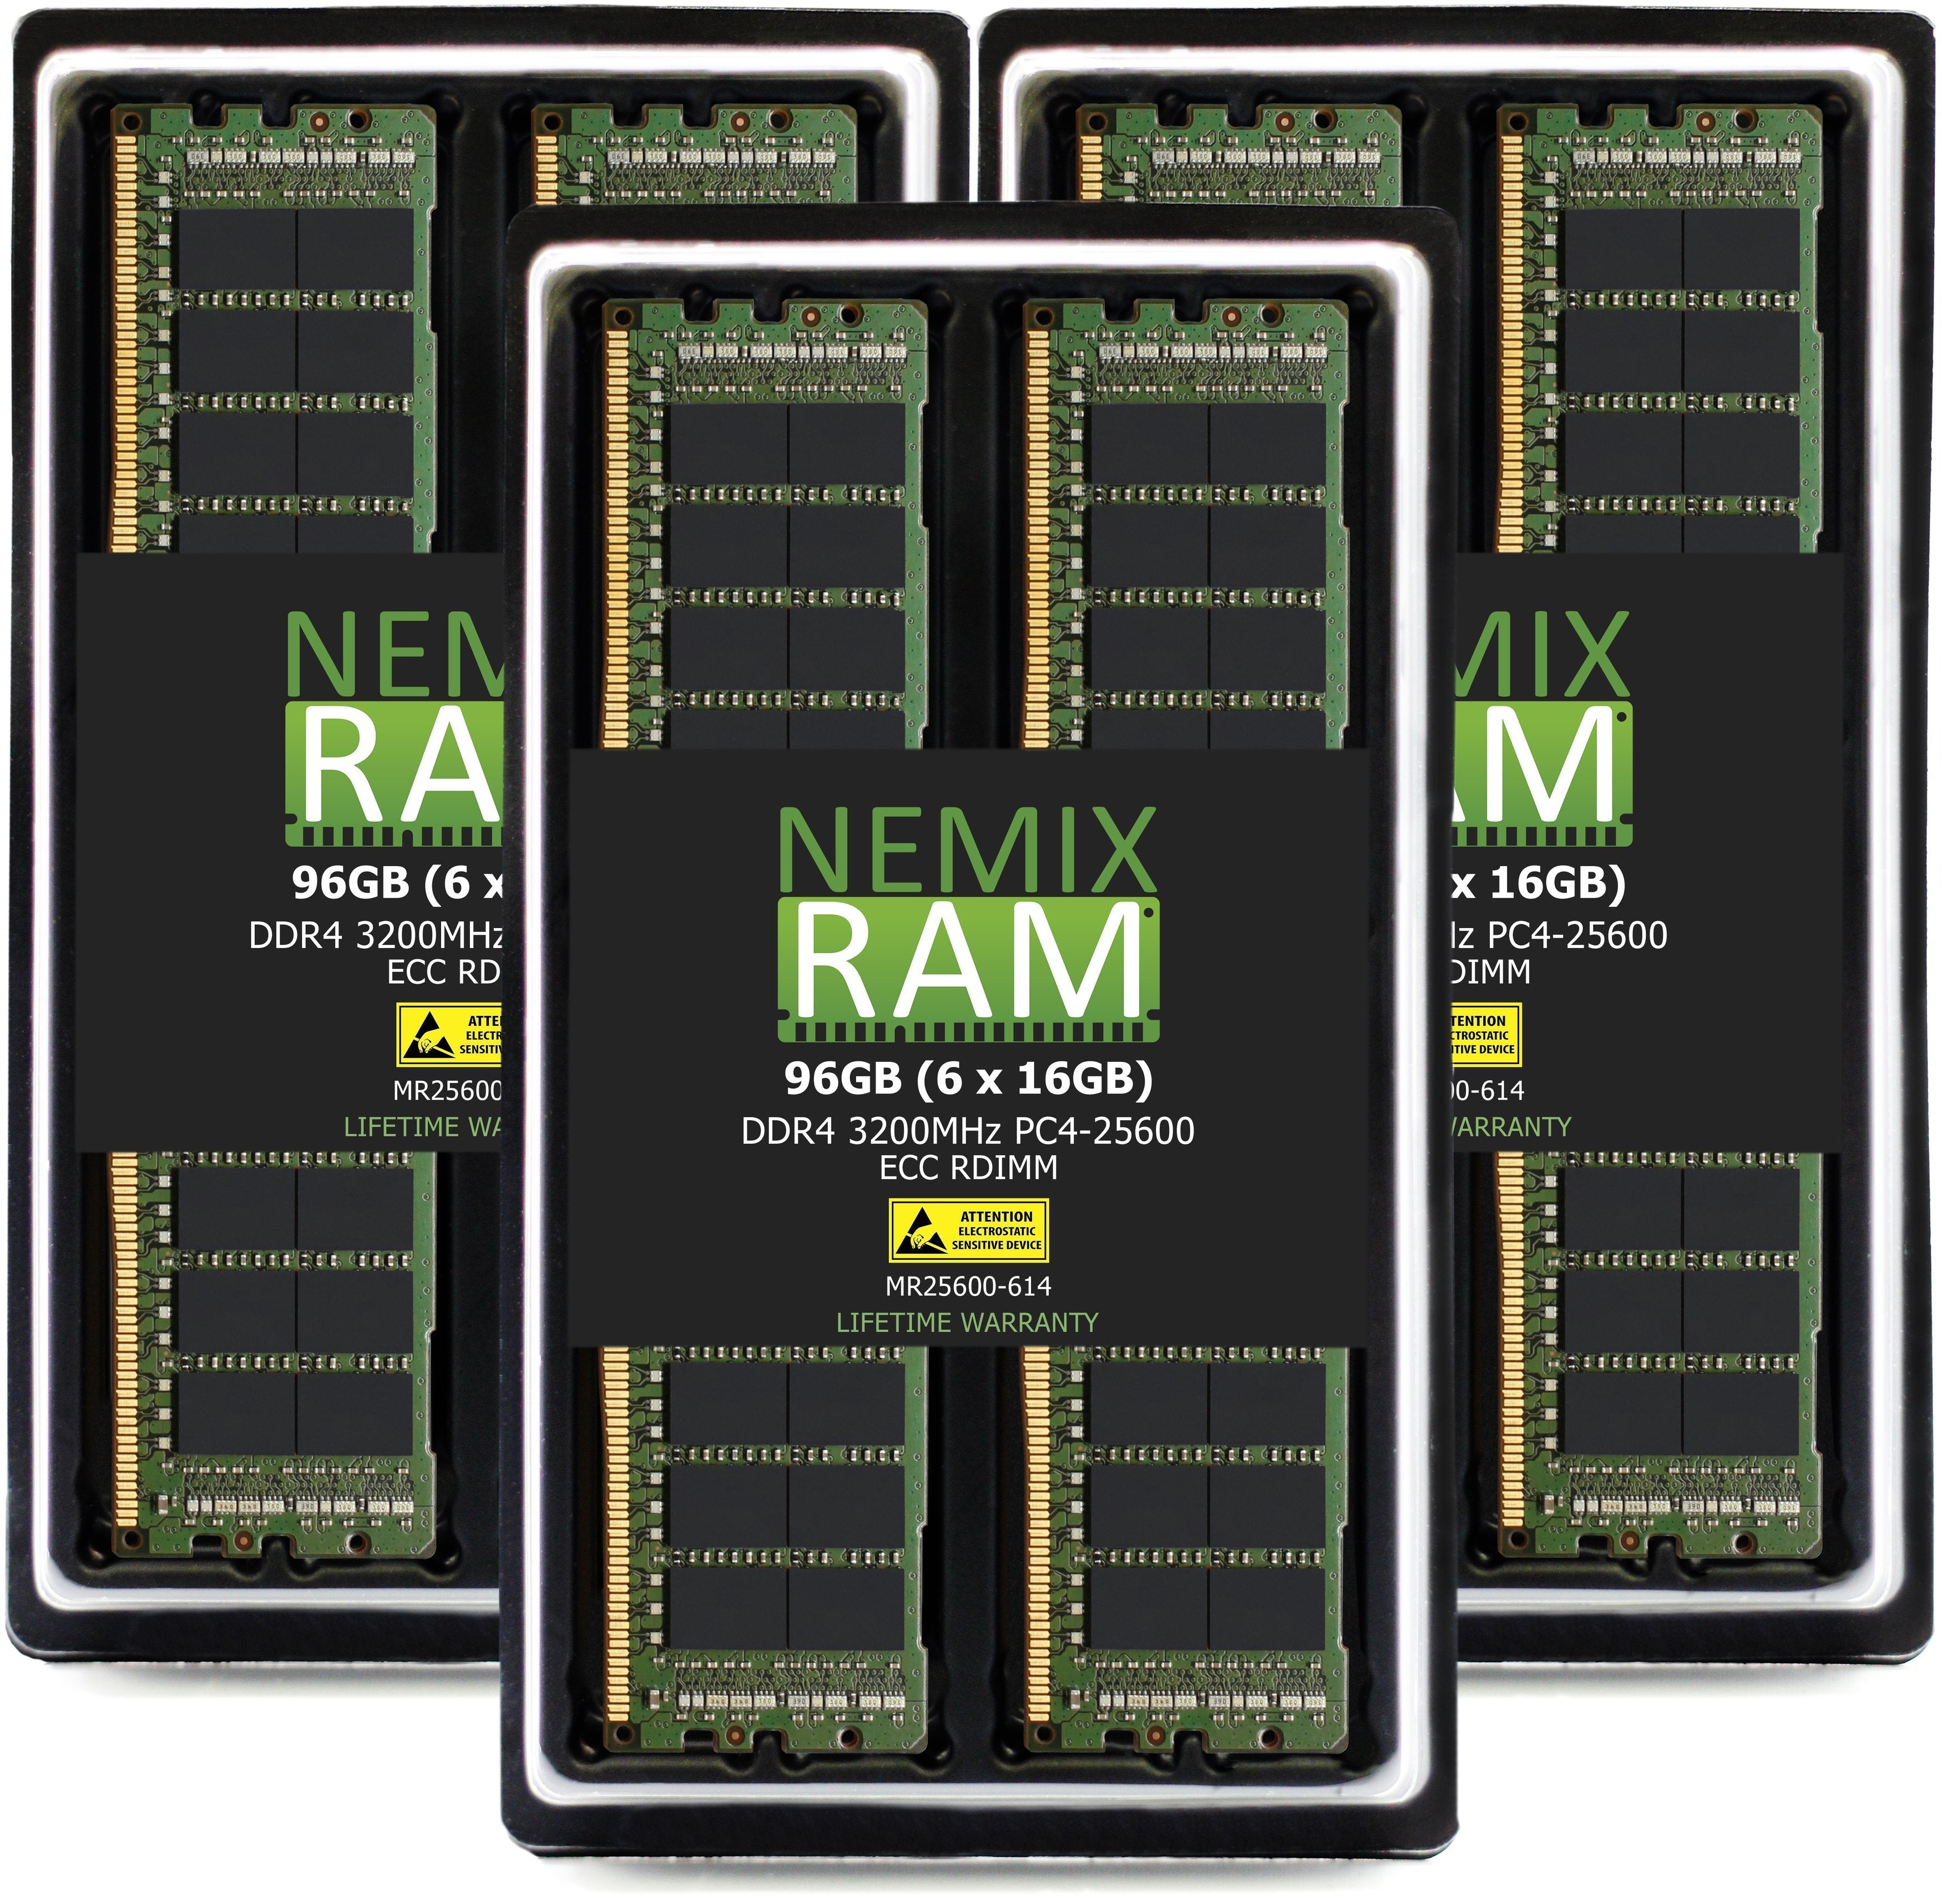 DDR4 3200MHZ PC4-25600 RDIMM 1RX4